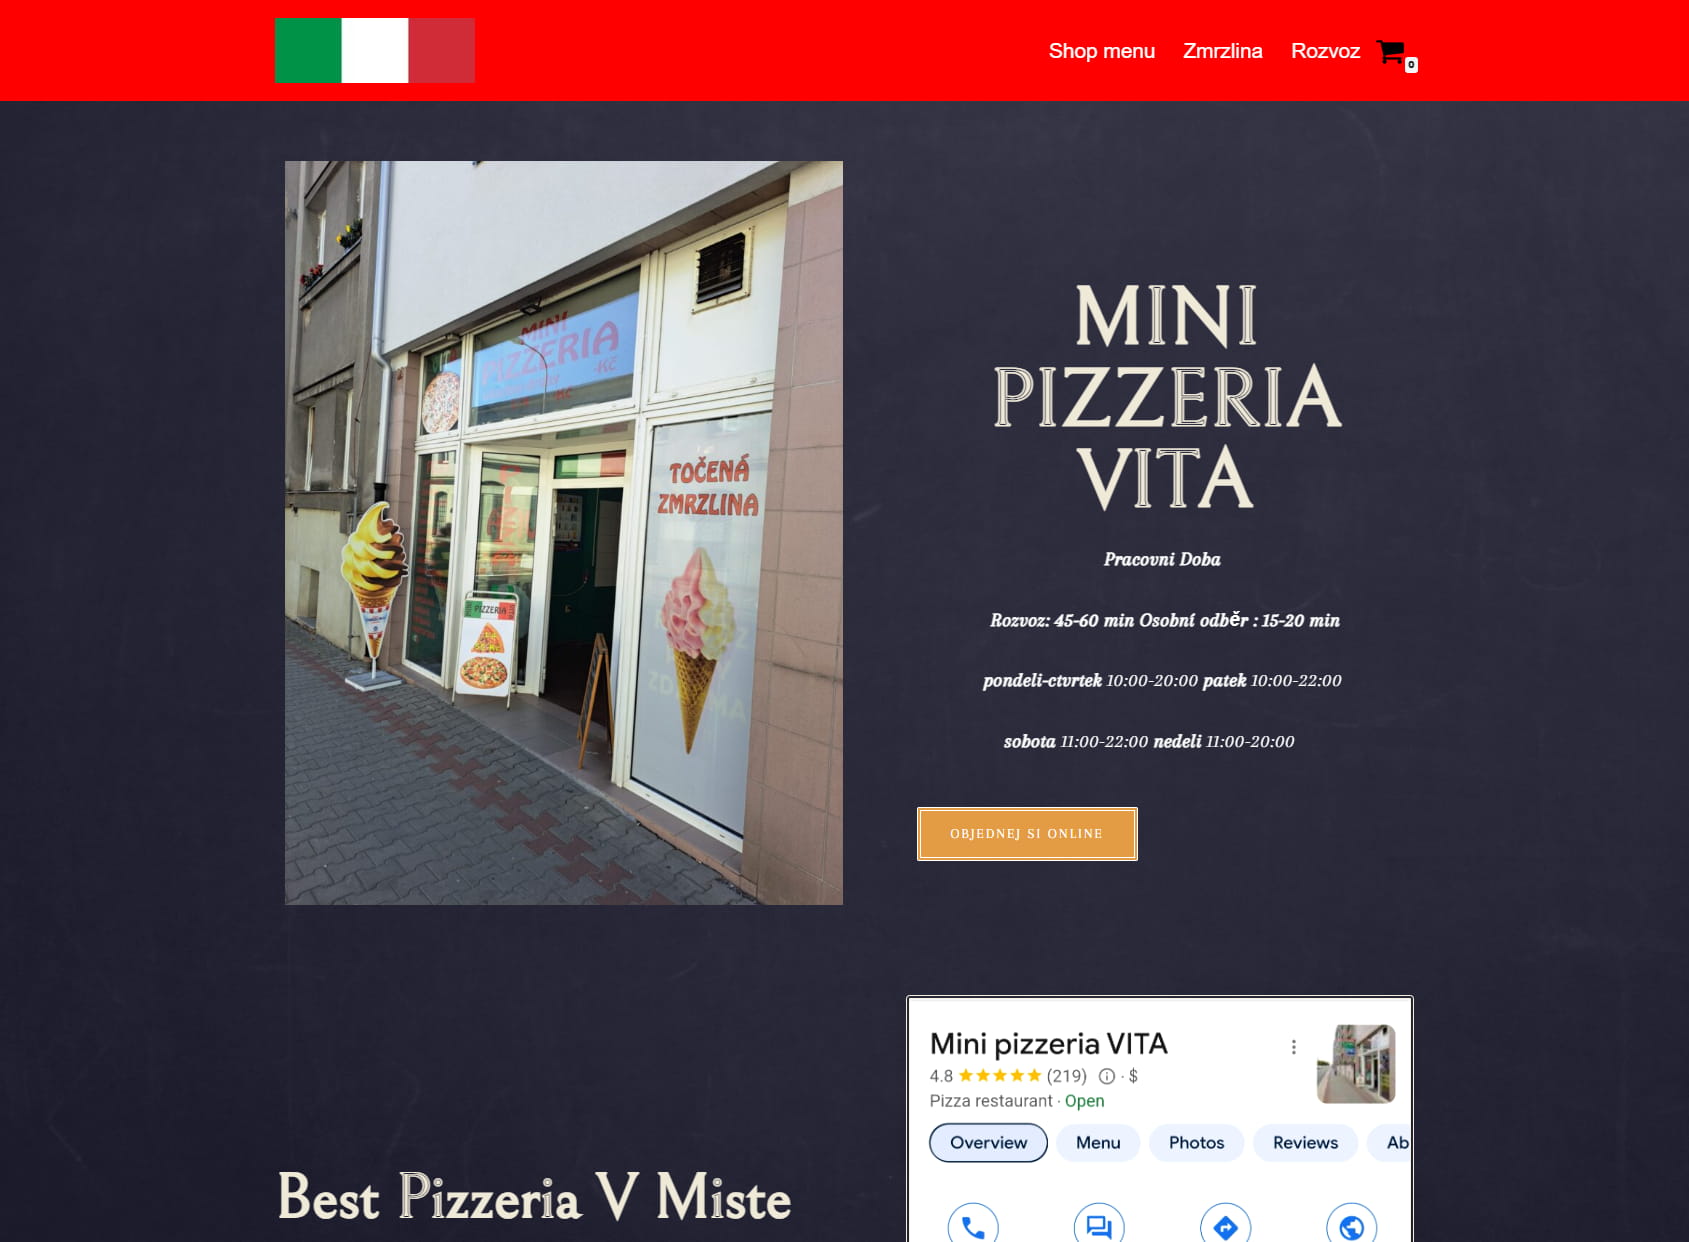 Mini pizzeria VITA